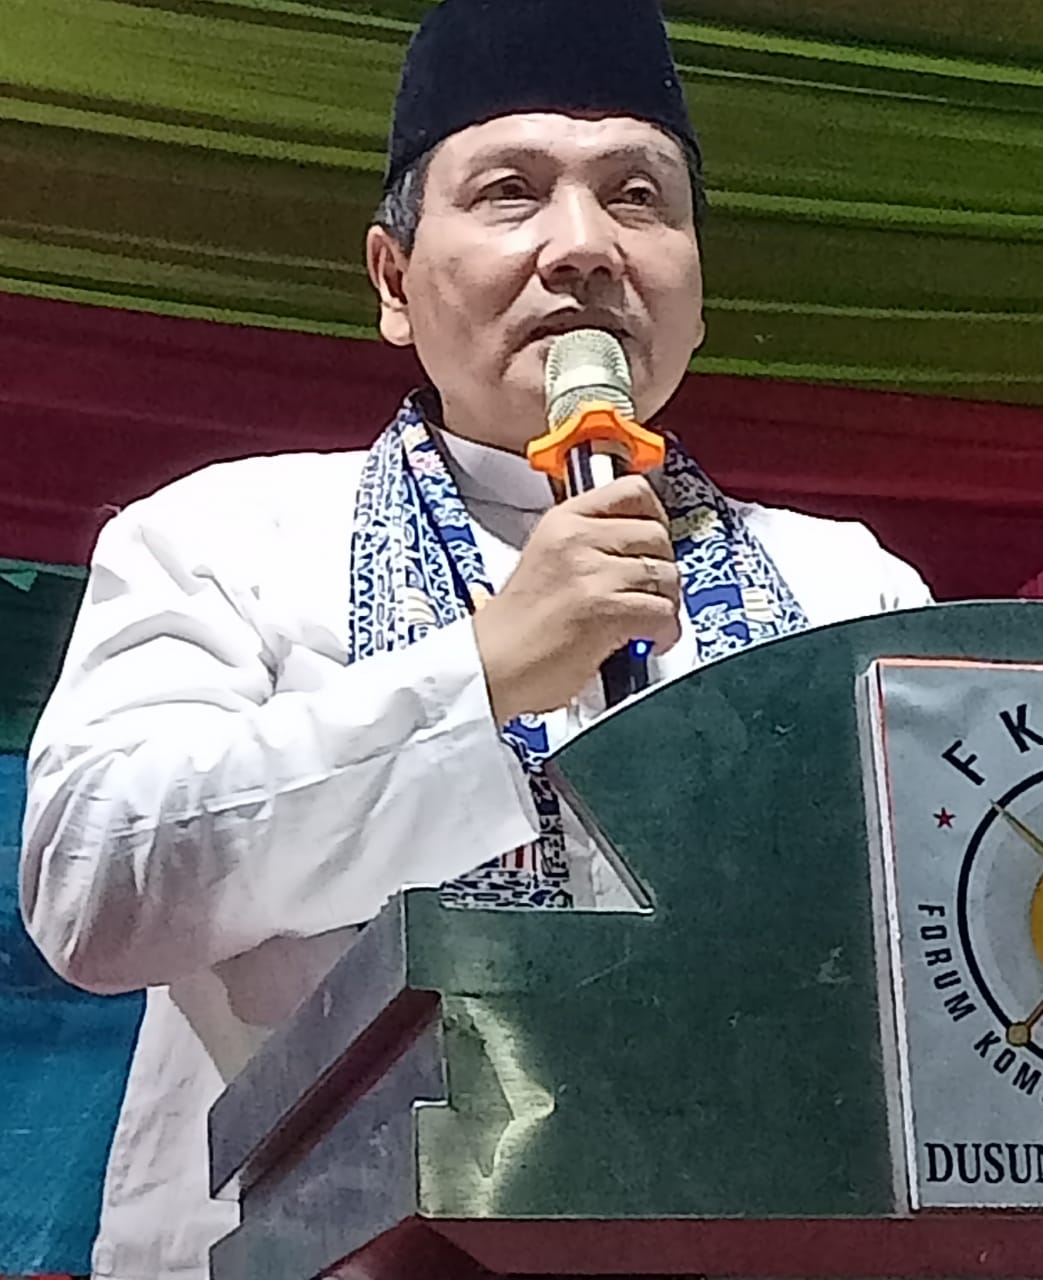 PJ Bupati Sarolangun Hadiri Silahtuhrahmi Akbar, Forum Komunikasi Sebeghoyot Dusun Sarolangun